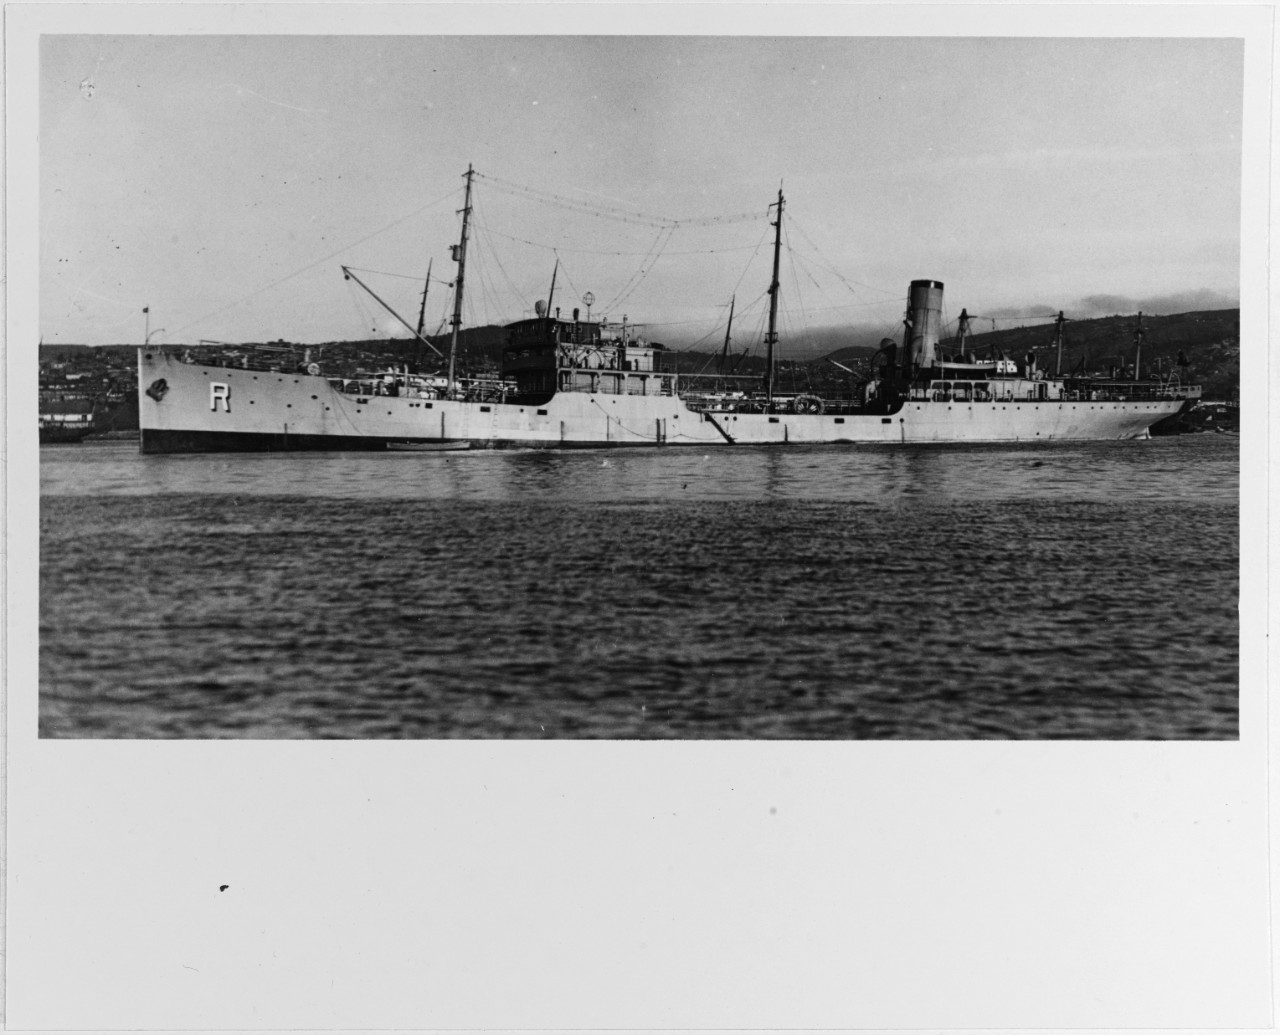 RANCAGUA (Chilean Navy Tanker, 1929)